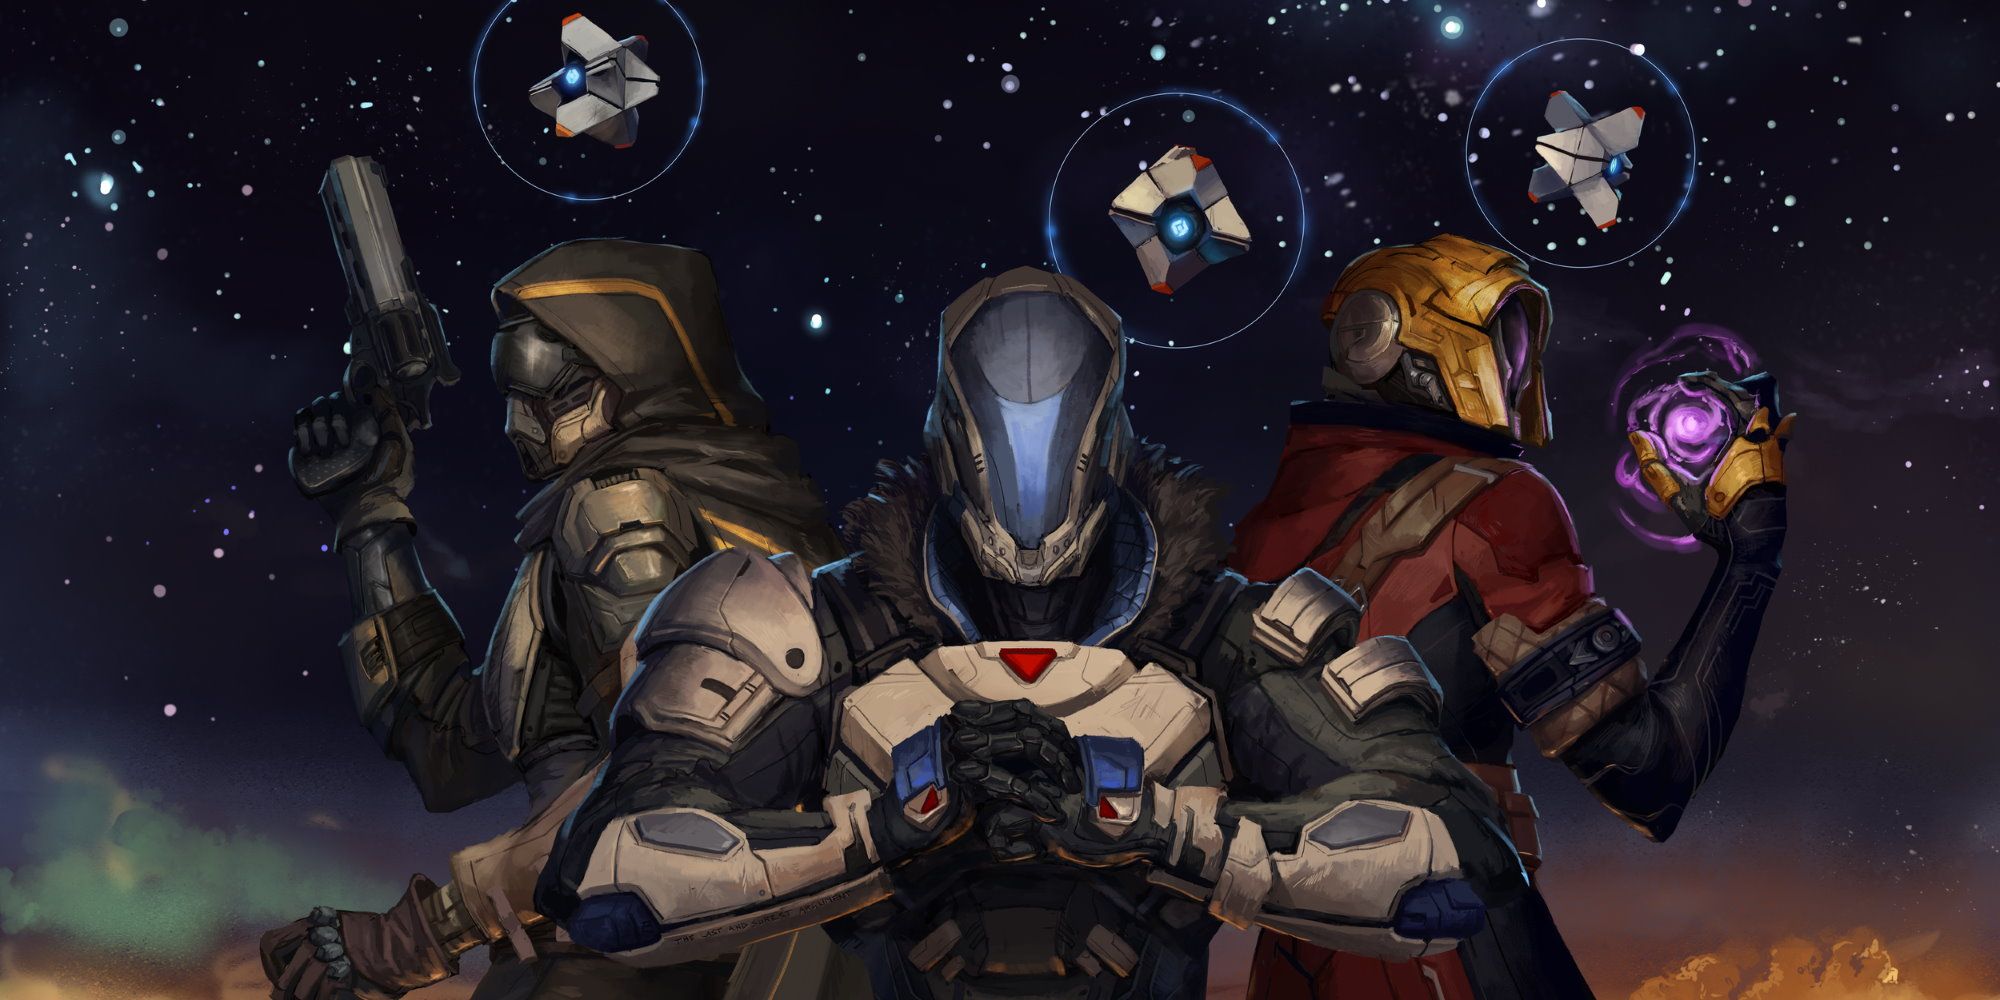 Destiny art featuring the three Guardian classes